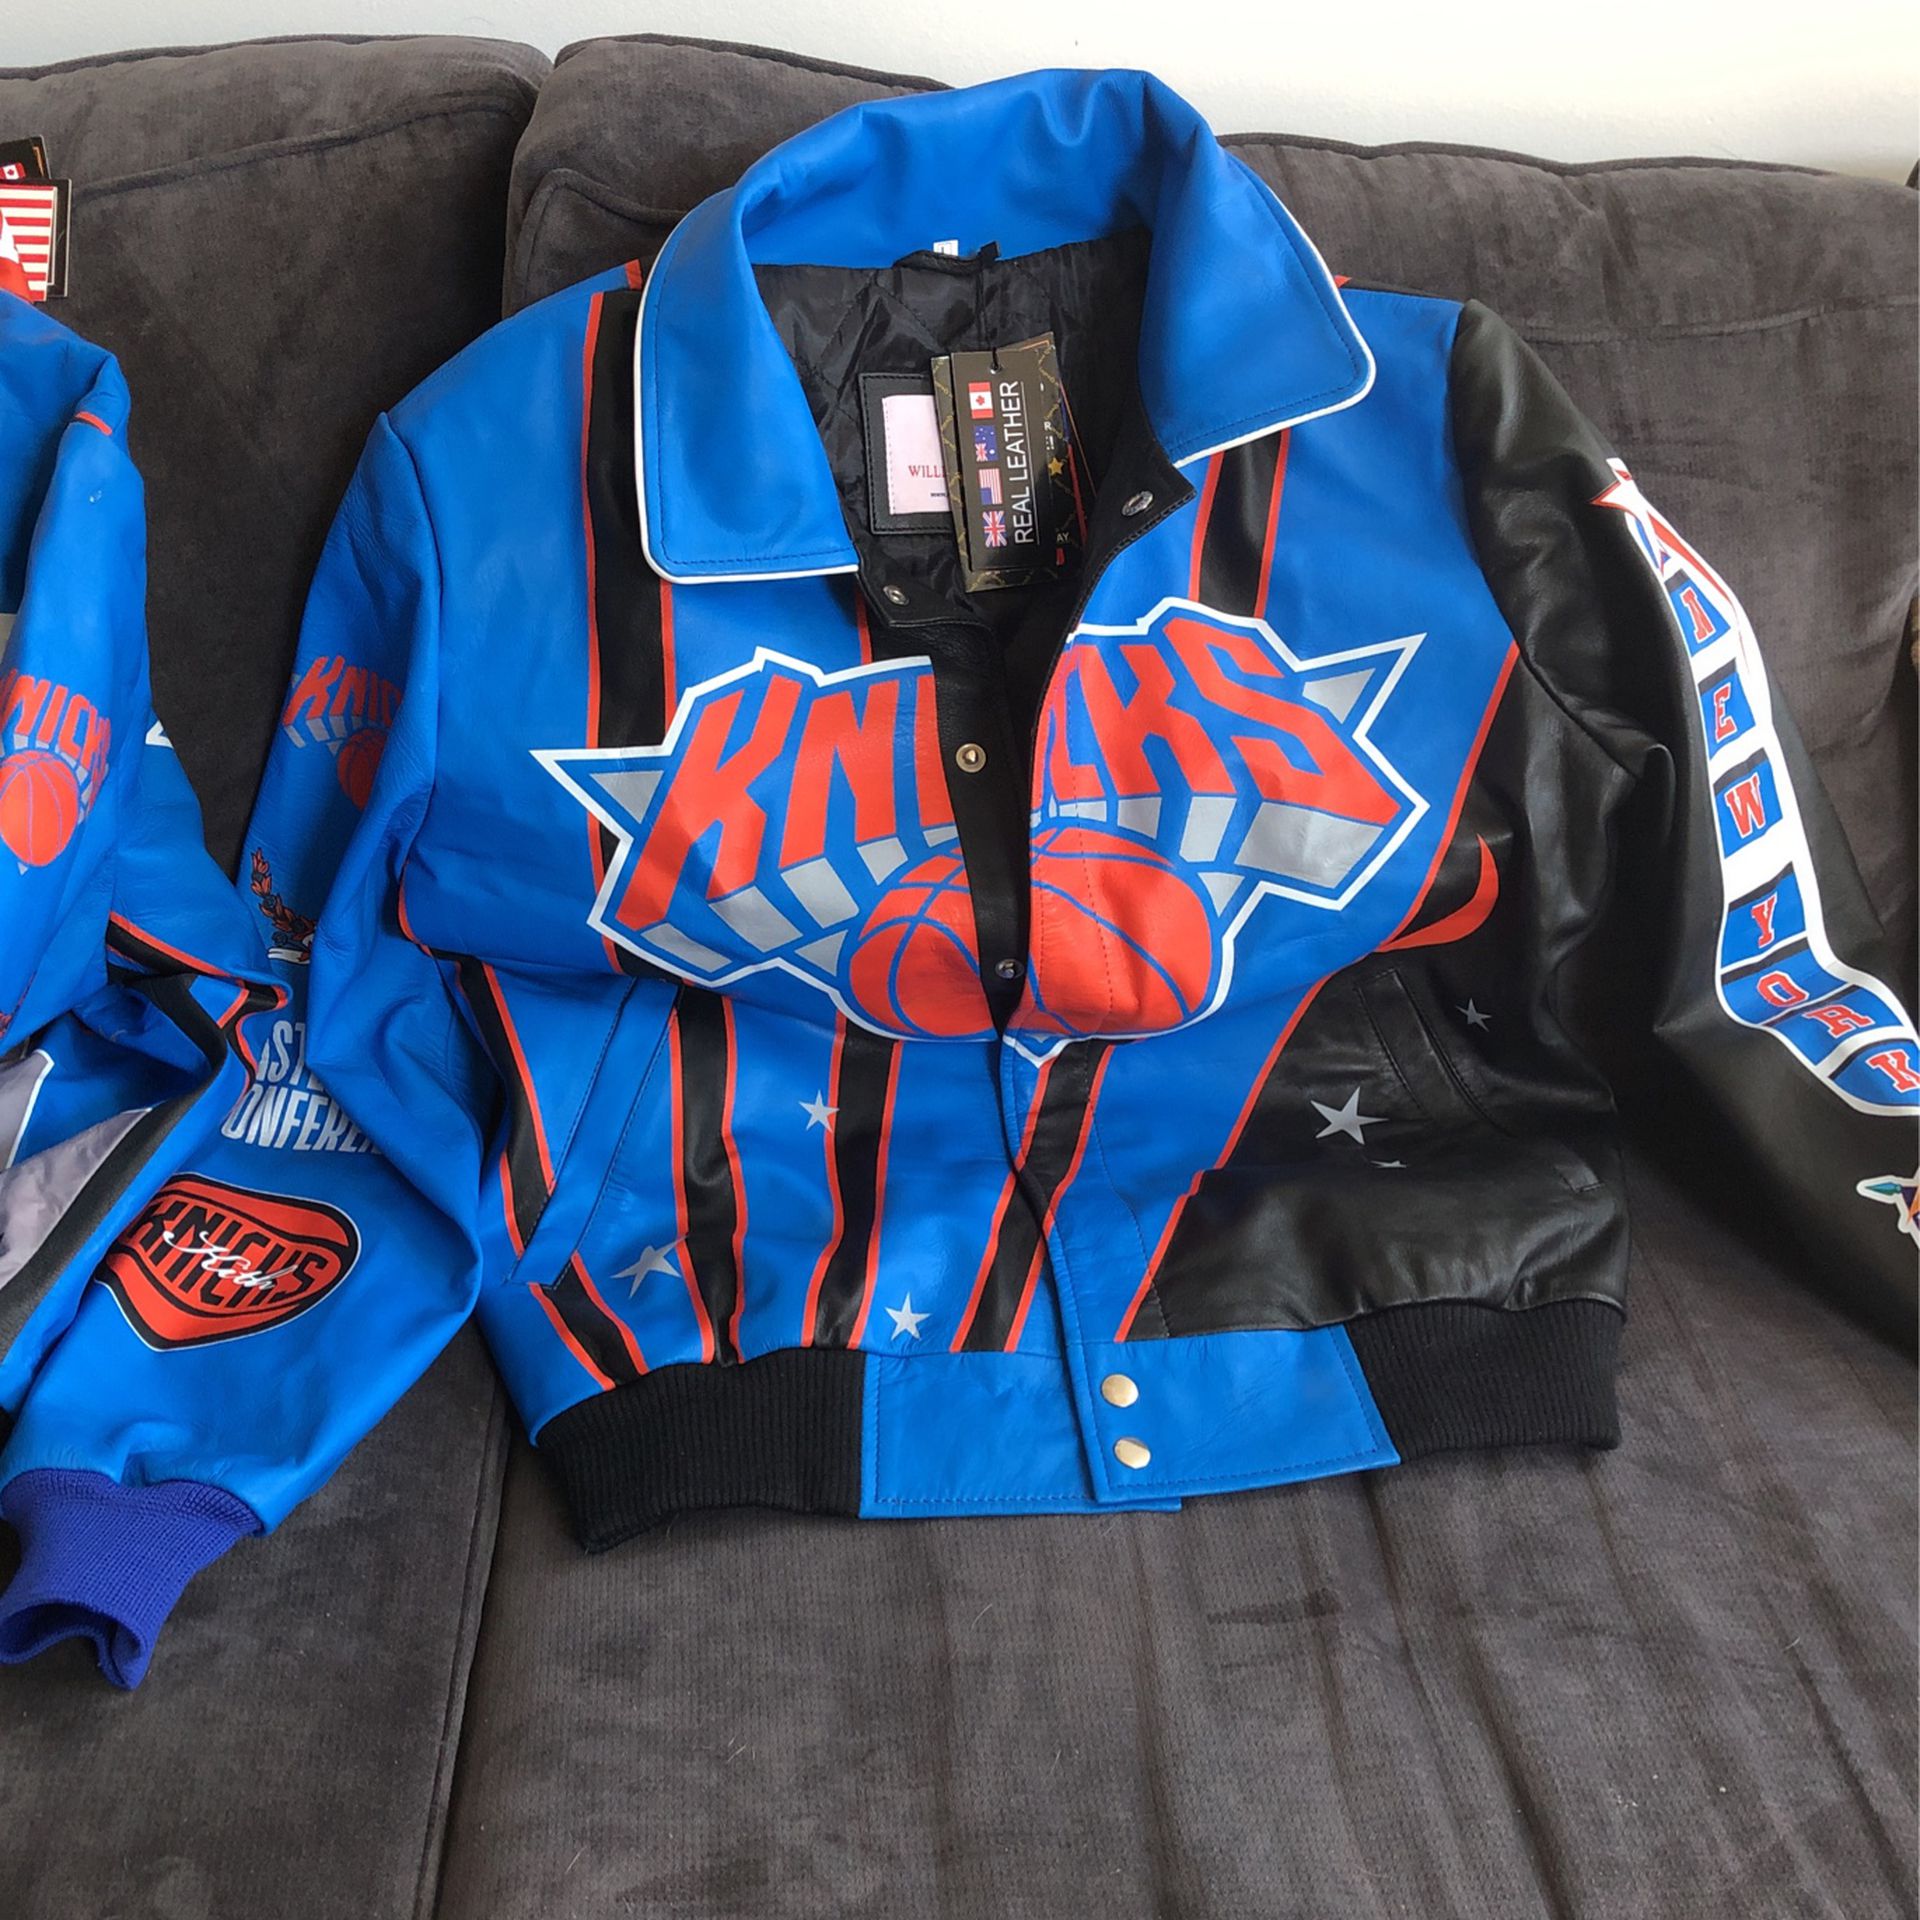 New York Knicks, leather jacket